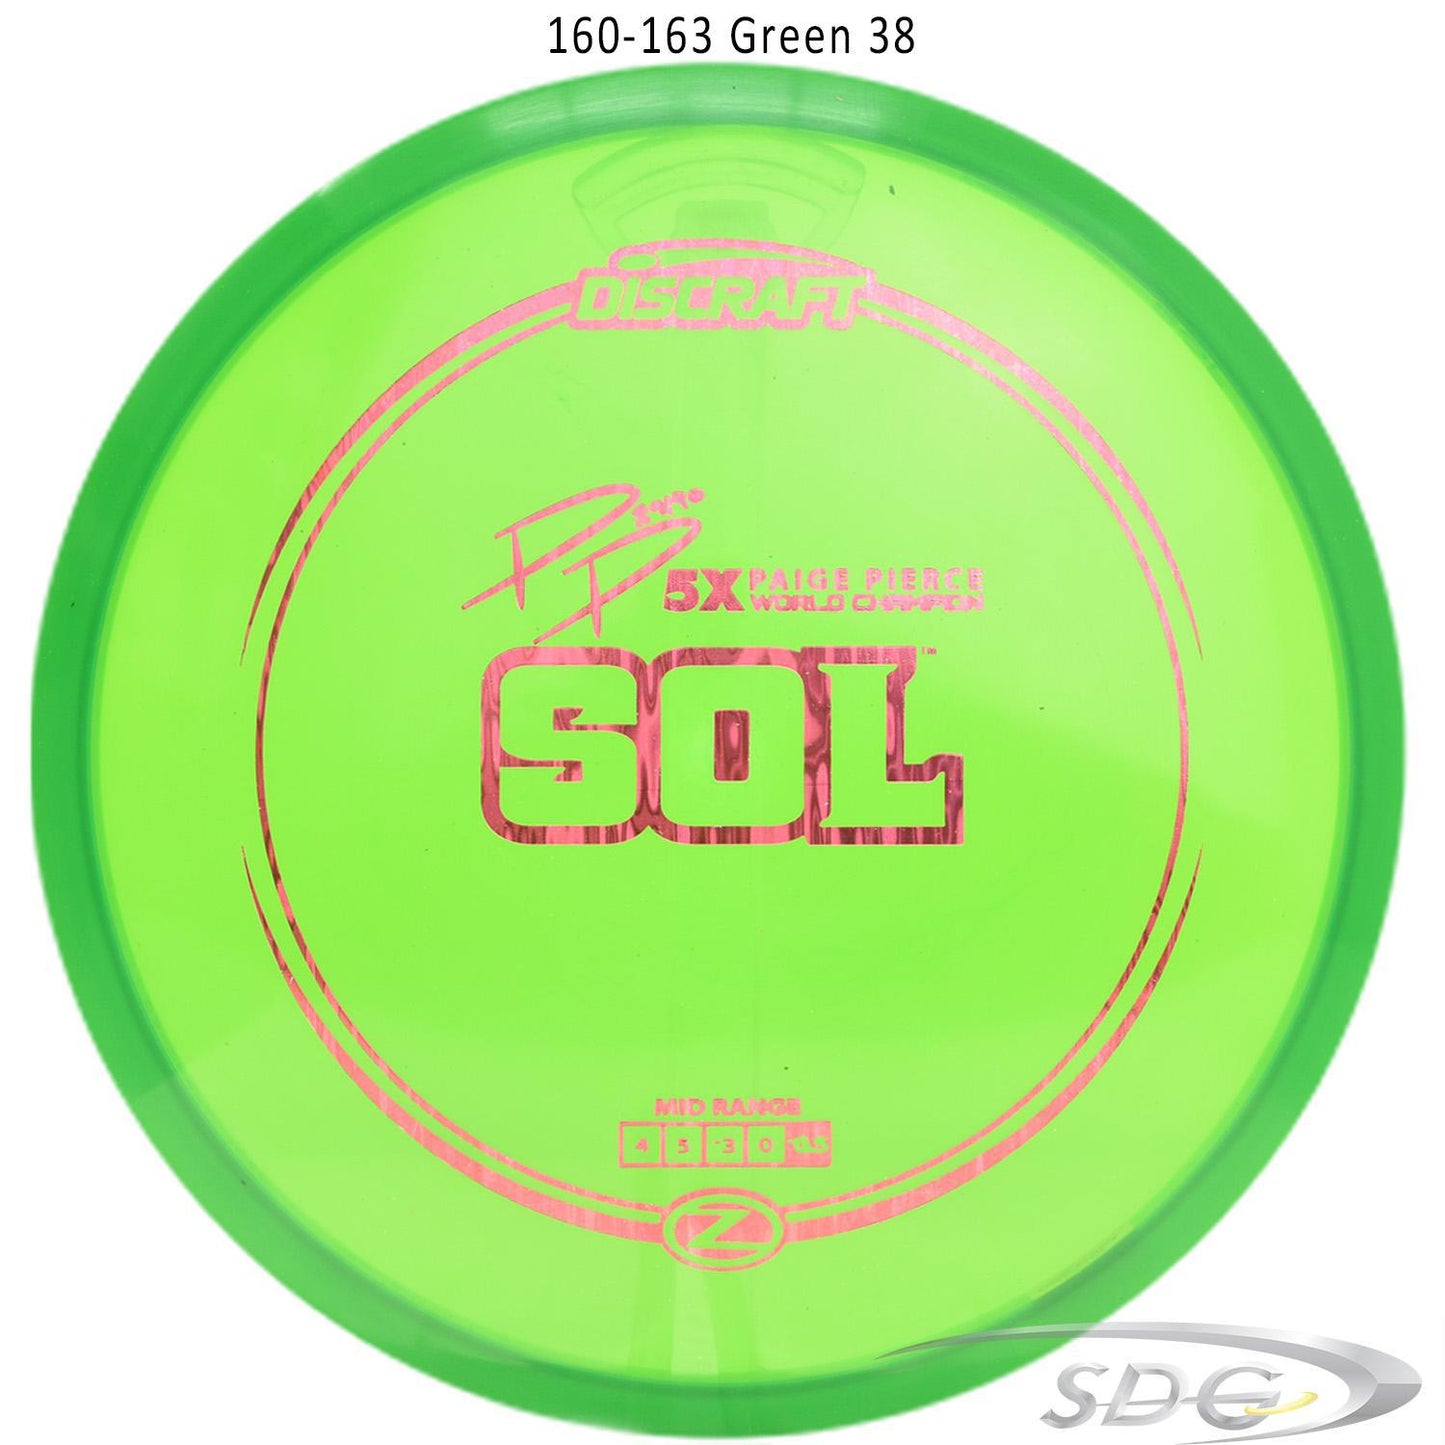 discraft-z-line-sol-paige-pierce-signature-disc-golf-mid-range 160-163 Green 38